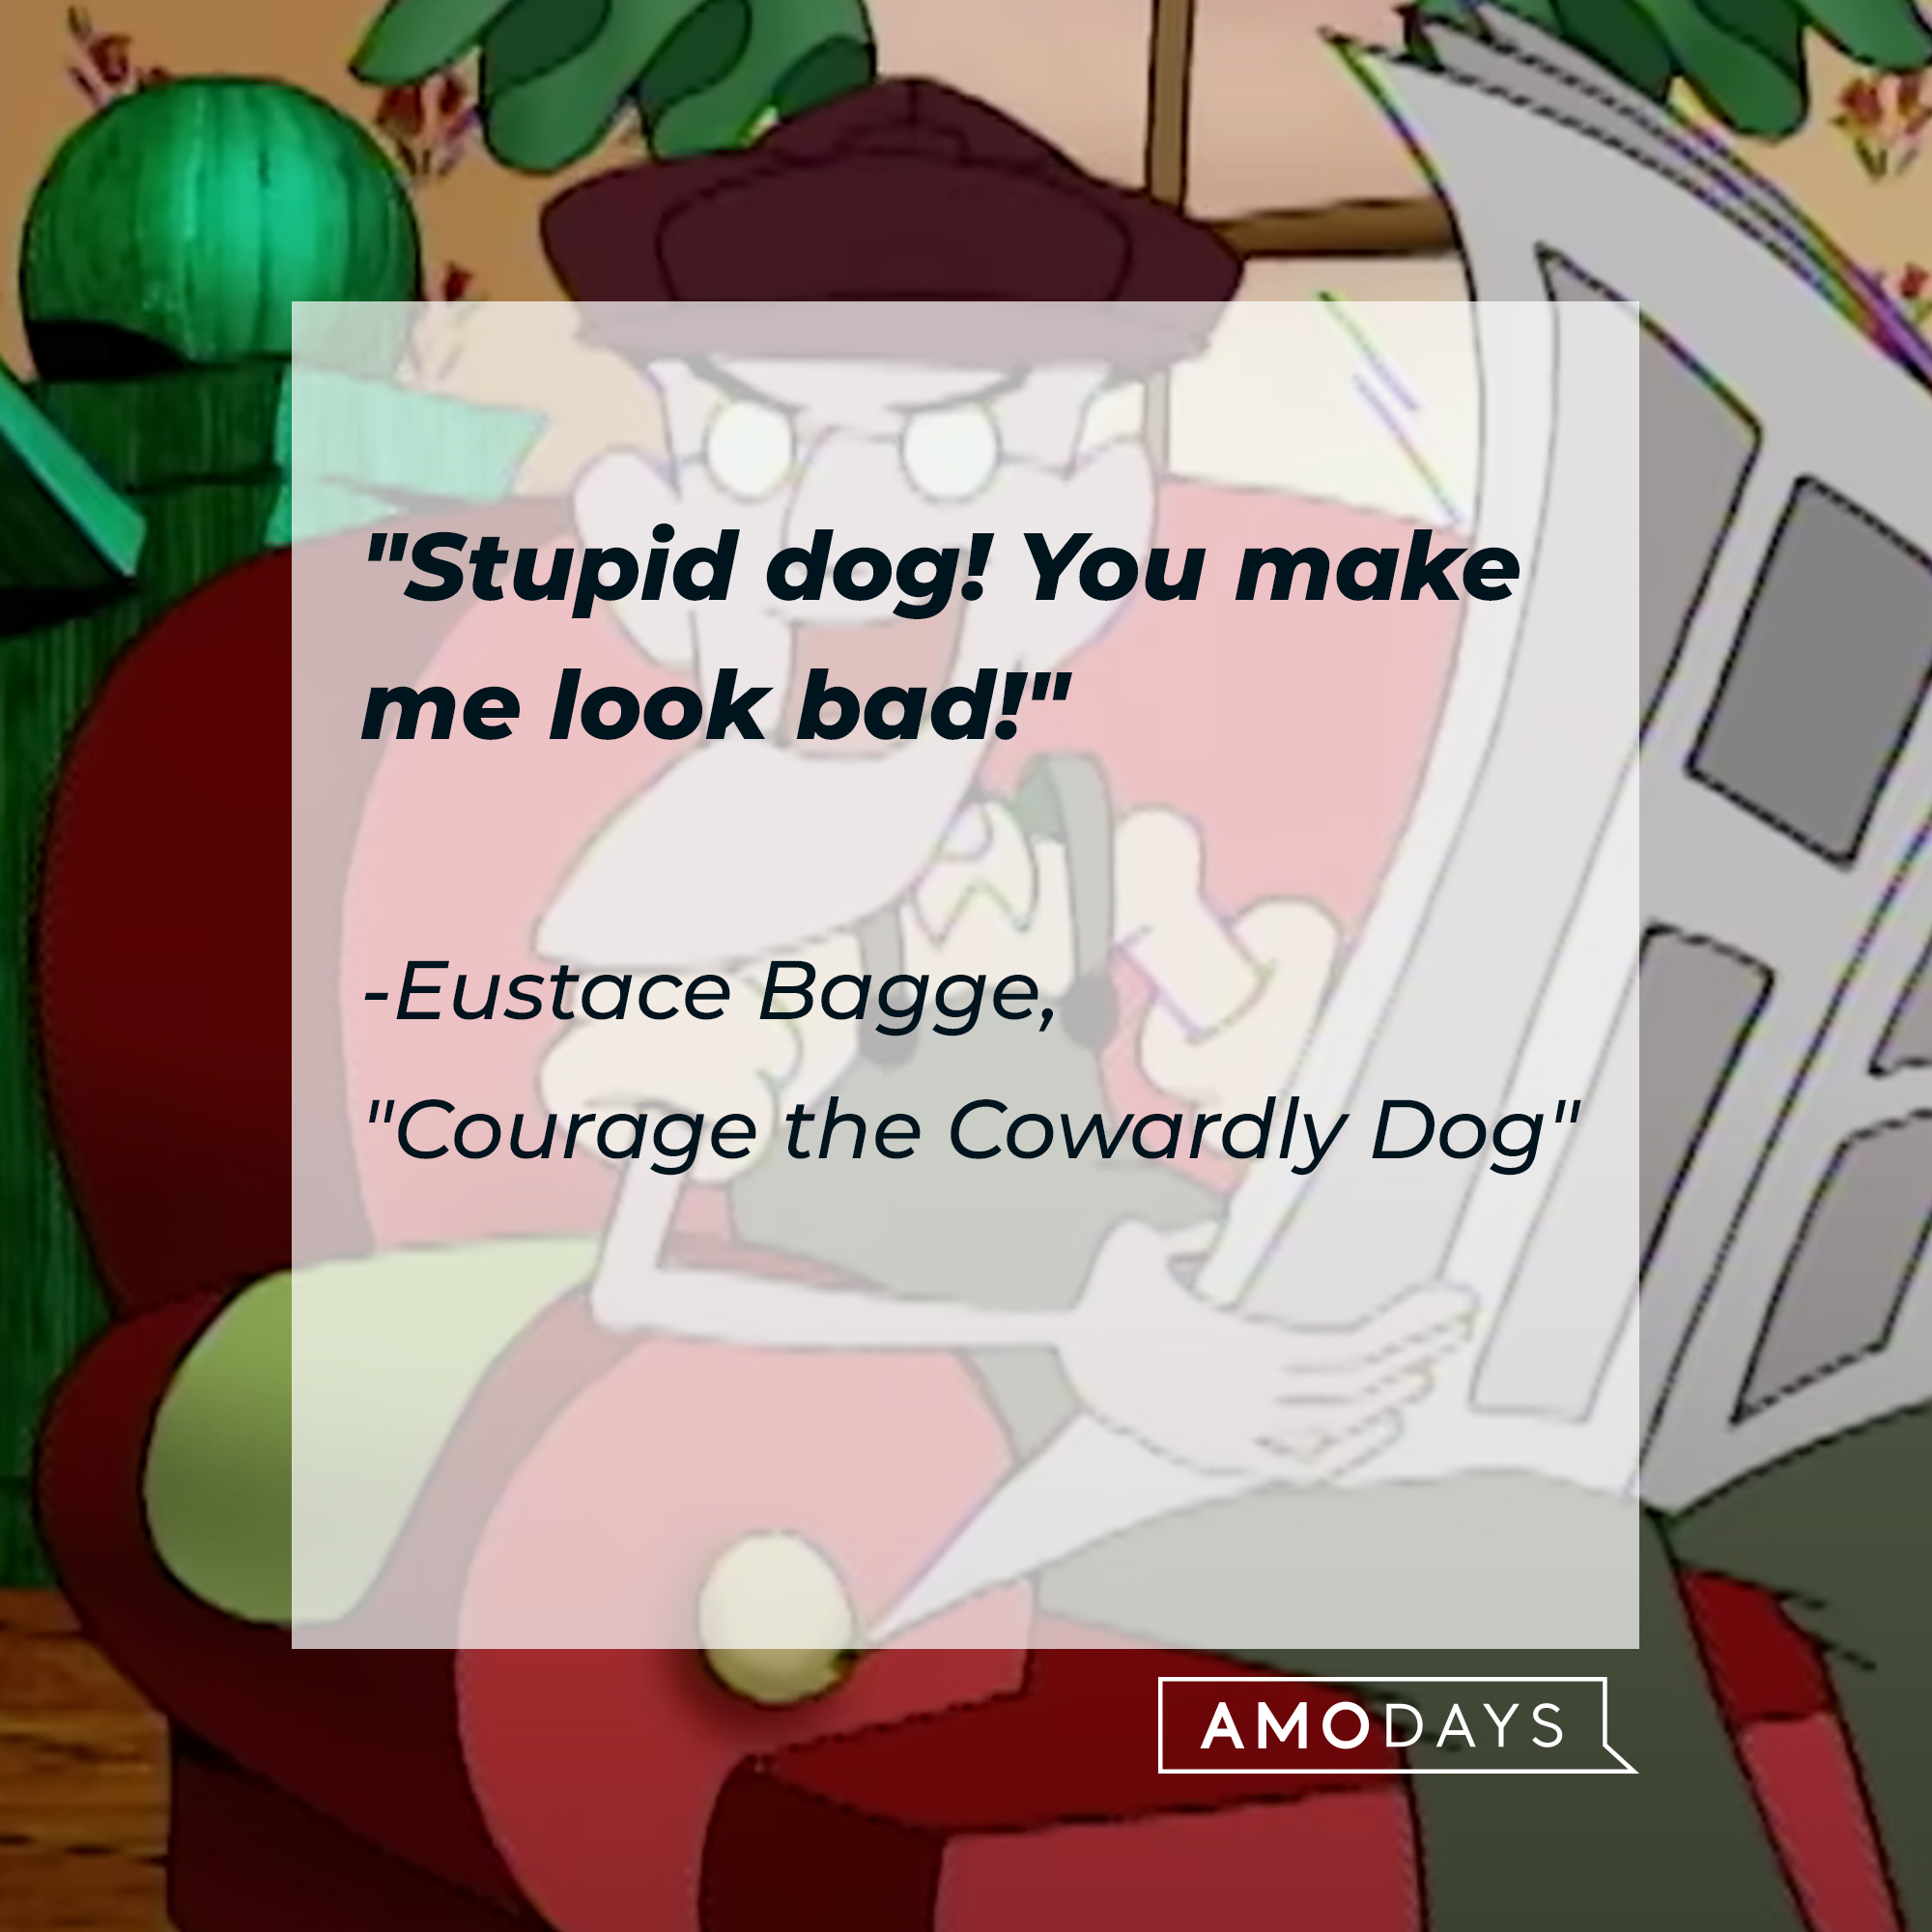 Eustace's quote: "Stupid dog! You make me look bad!" | Source: Facebook.com/CartoonNetwork